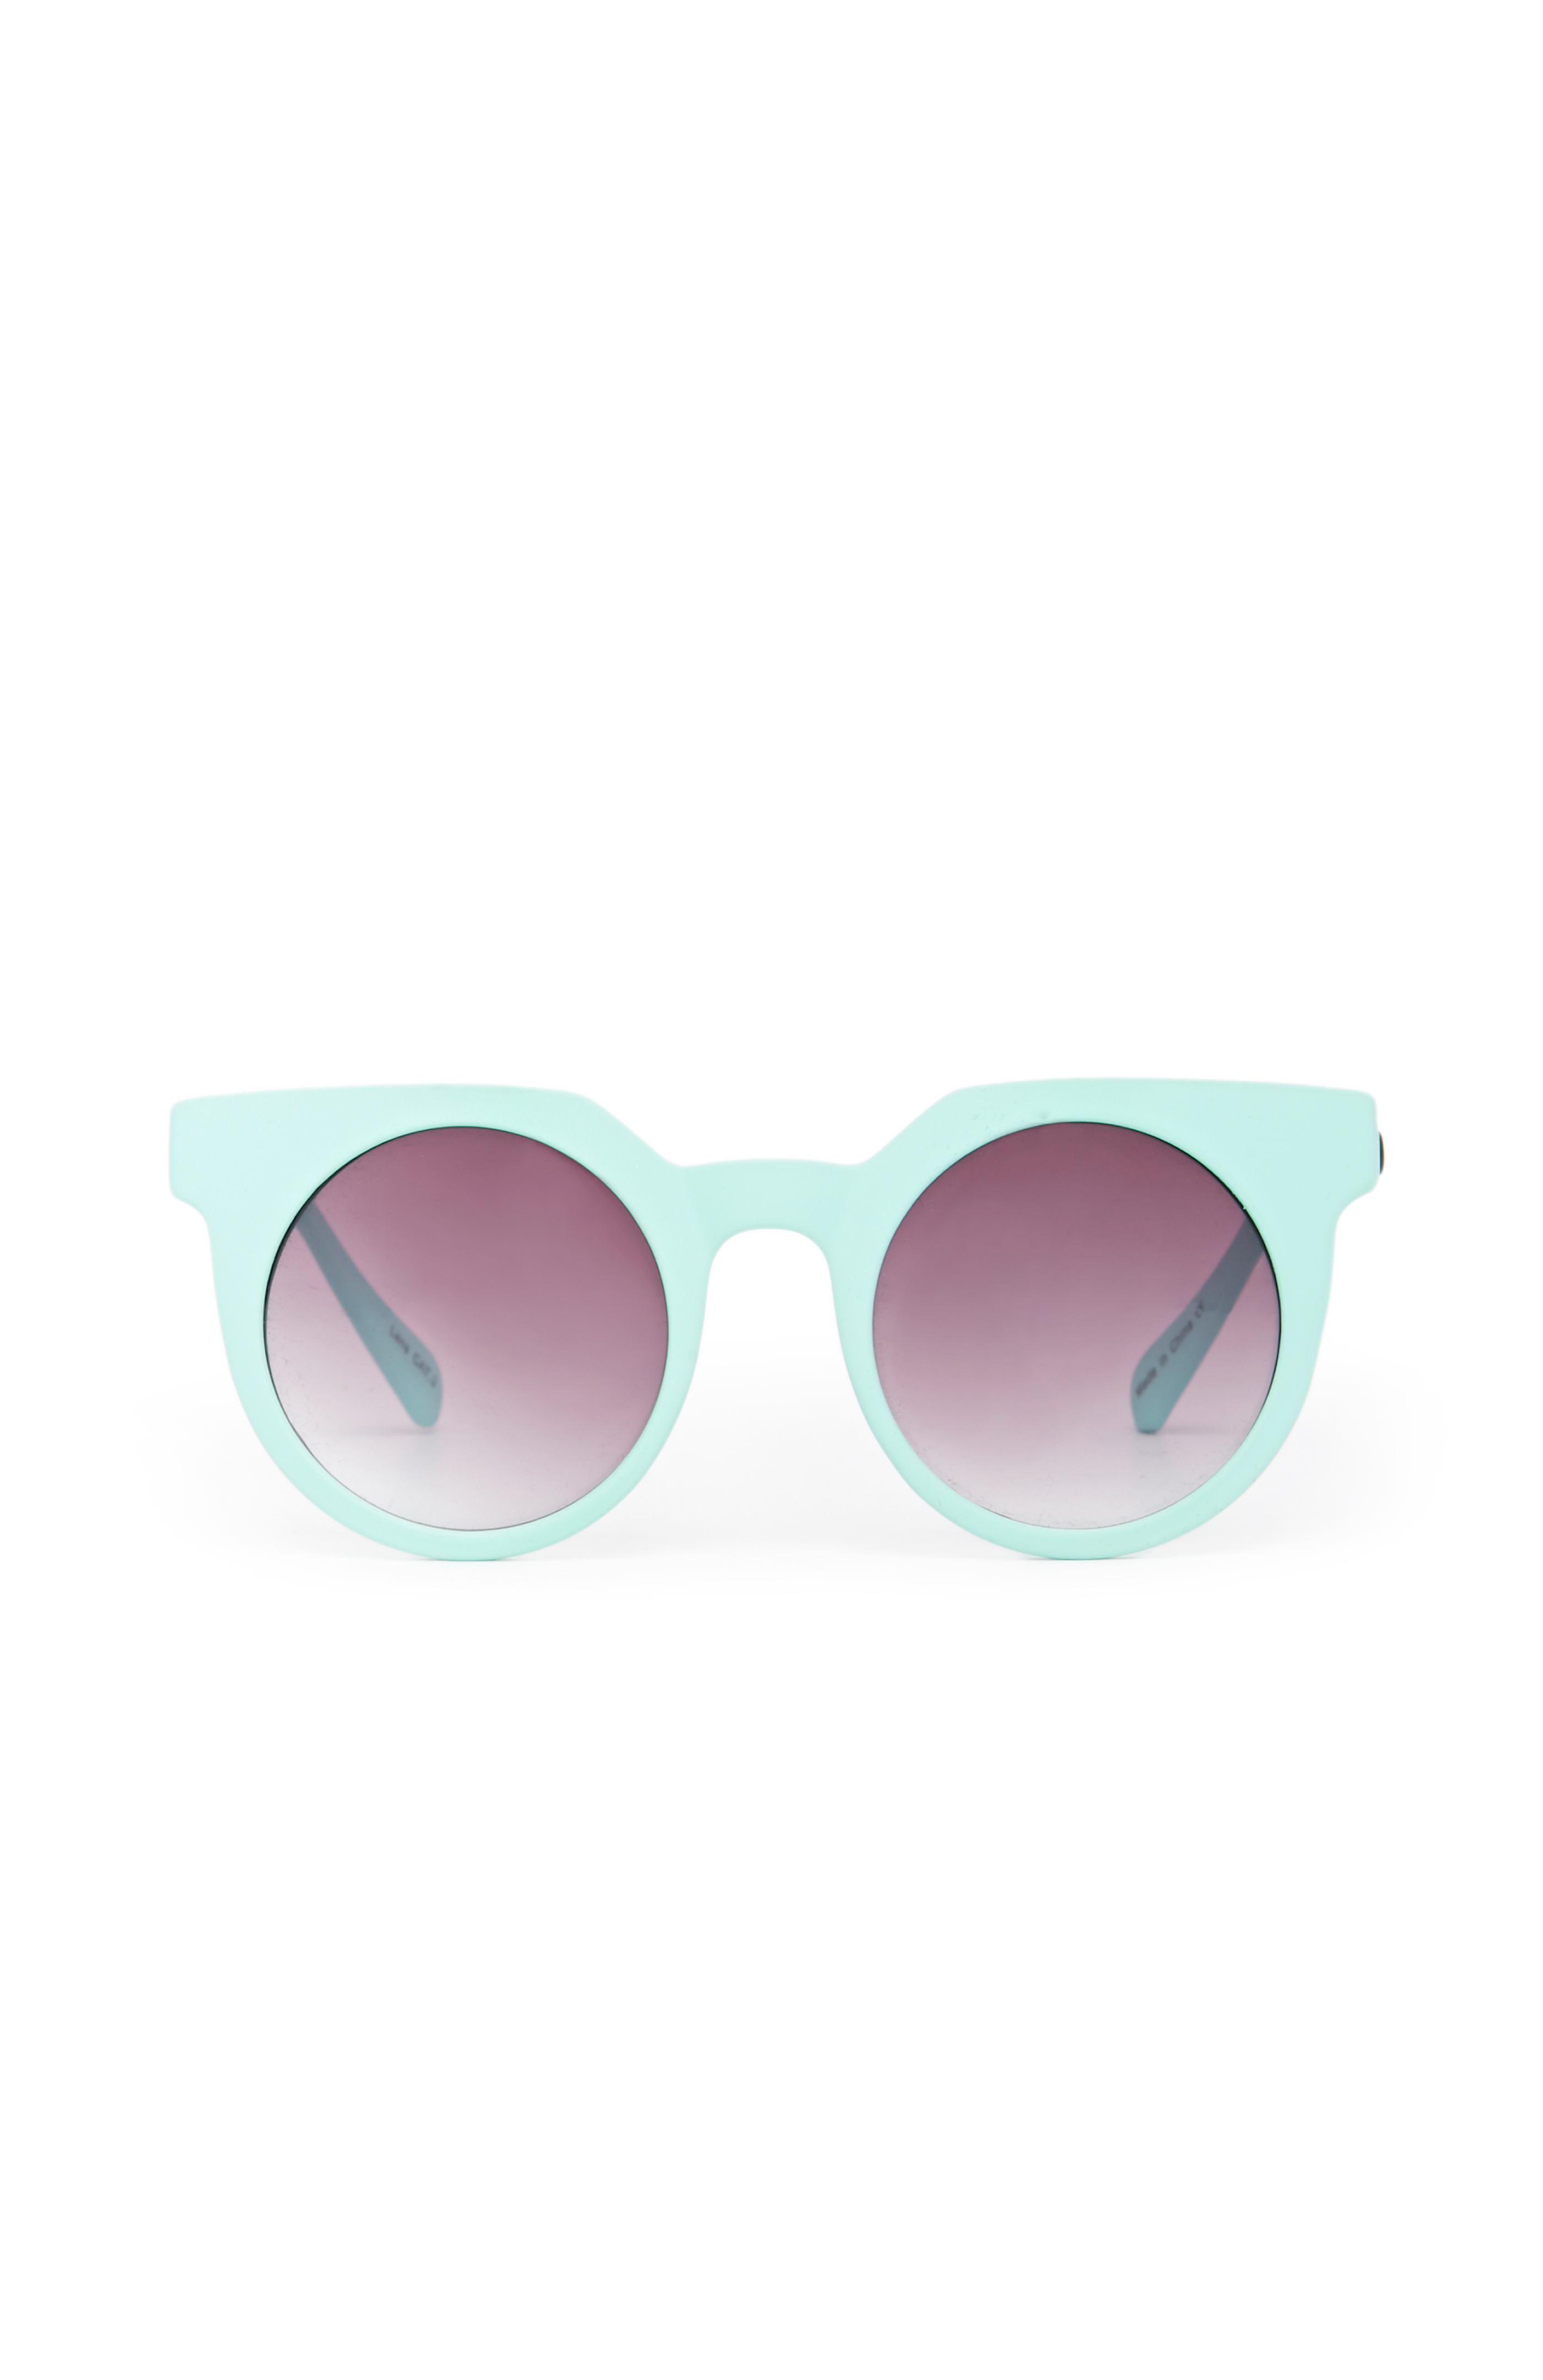 Quay Frankie Sunglasses in Mint | DAILYLOOK